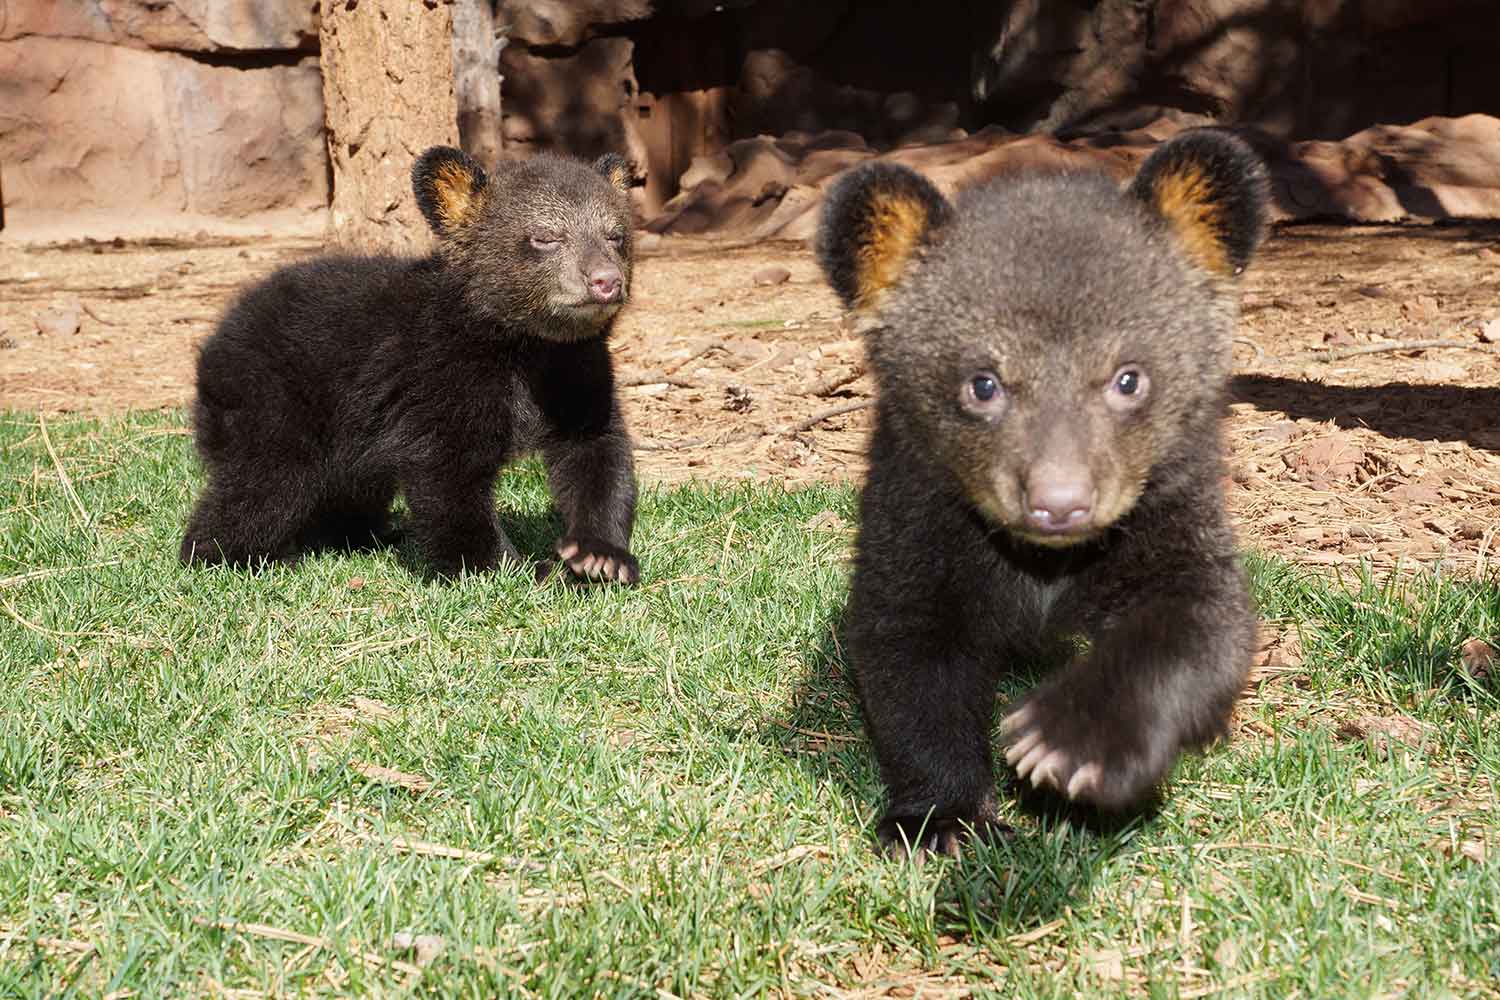 Bearizona Wildlife Park - Bear Cubs | Arizona Attractions